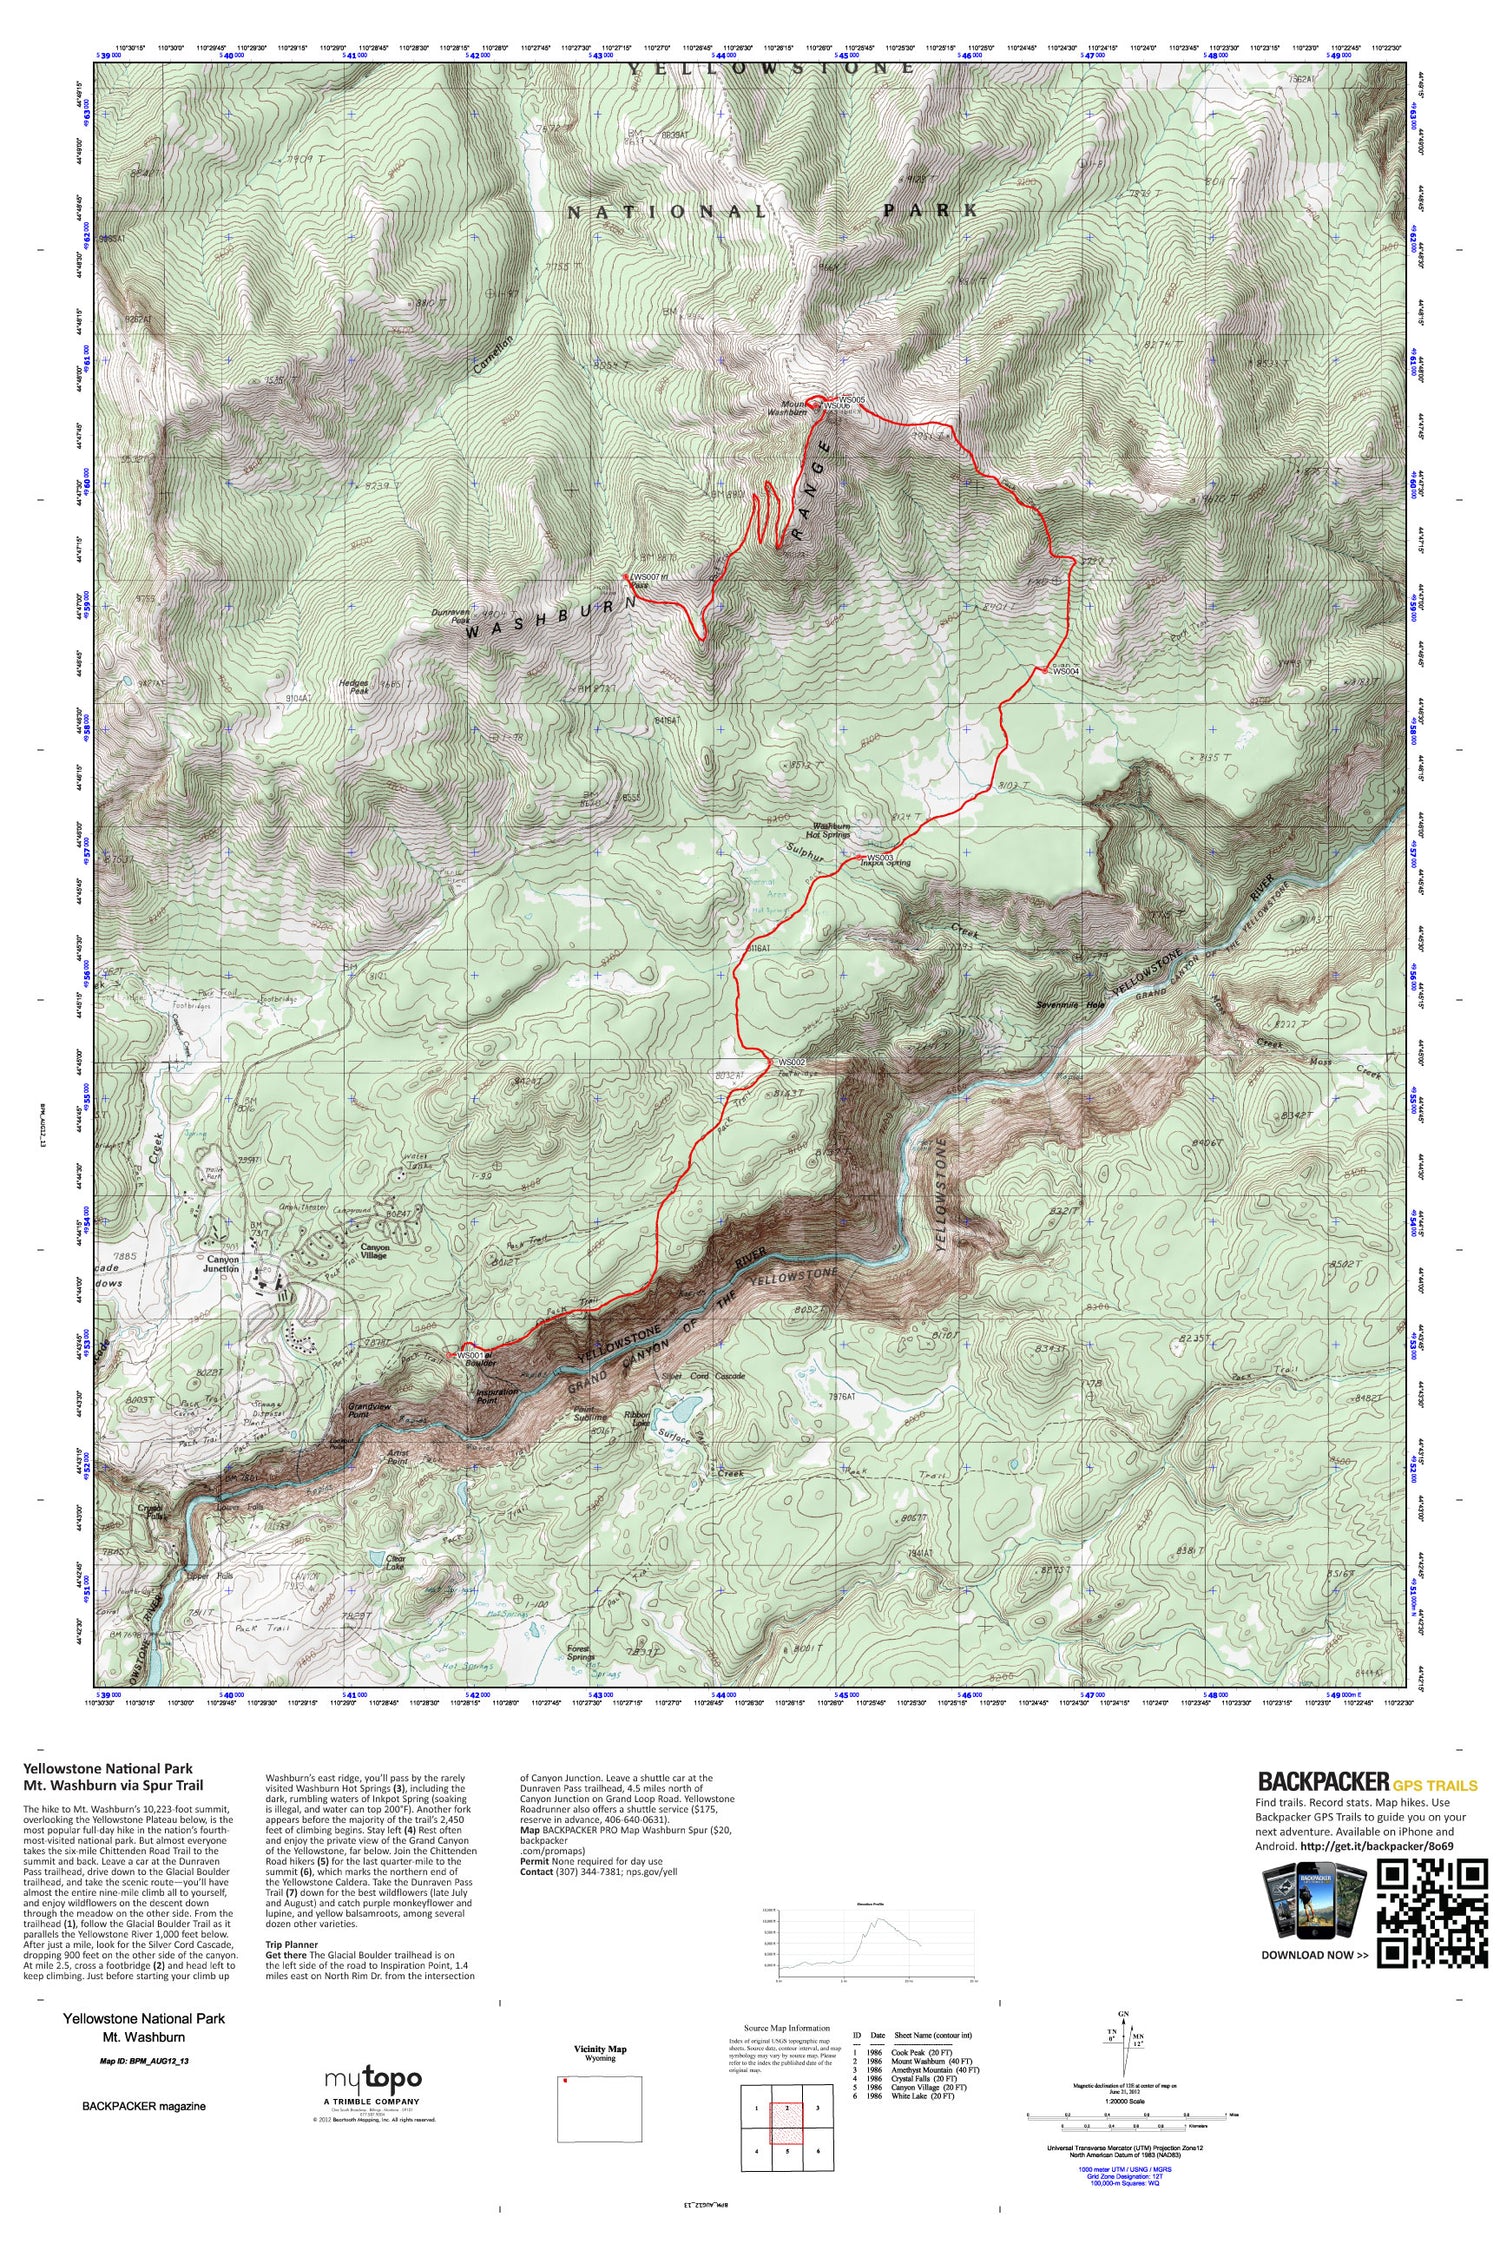 Mount Washburn via Dunraven Pass Trailhead Map (Yellowstone NP, Wyoming) Image